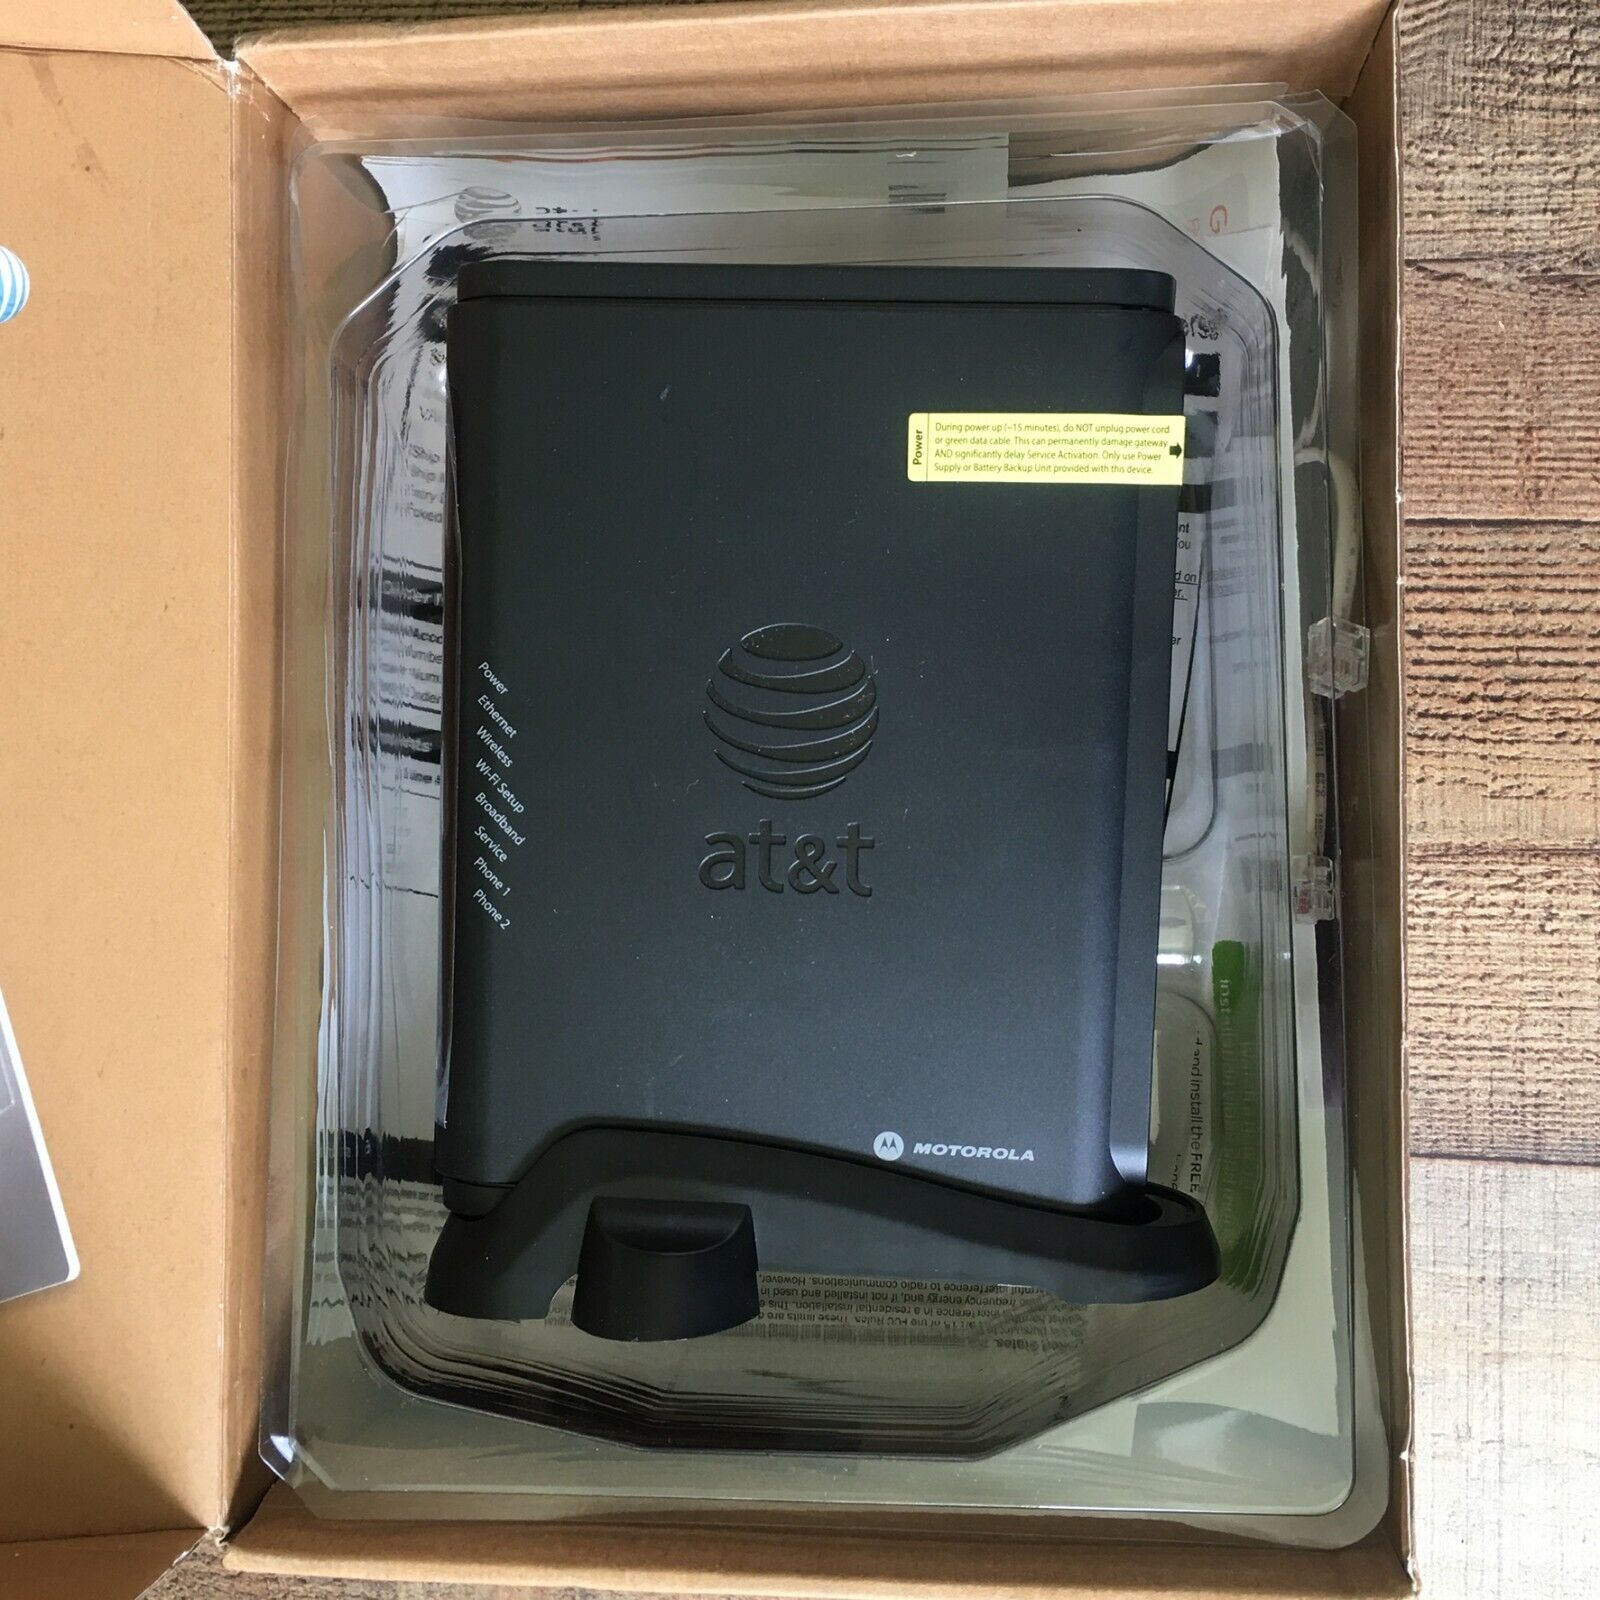 AT&T Motorola NVG510 DSL Modem Wireless WiFi Internet Router - New in Box